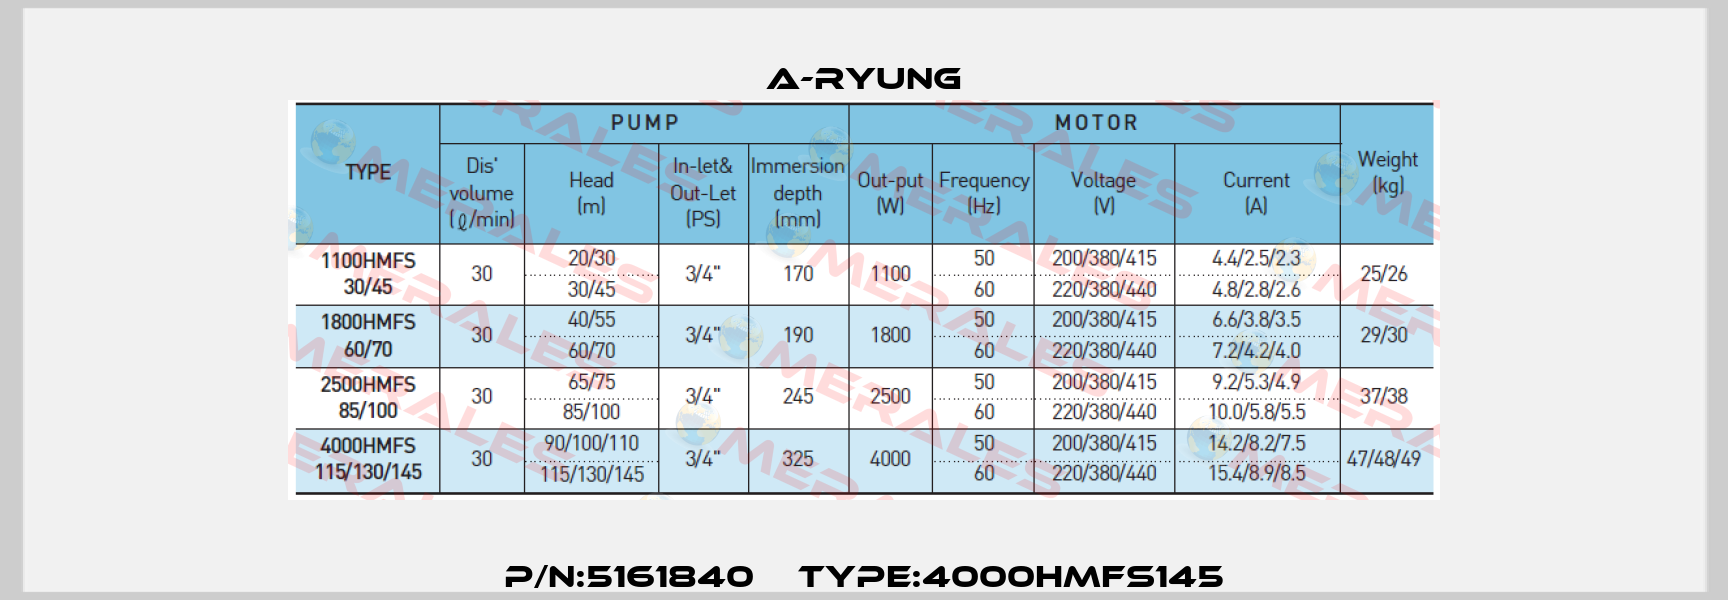 p/n:5161840    Type:4000HMFS145 A-Ryung